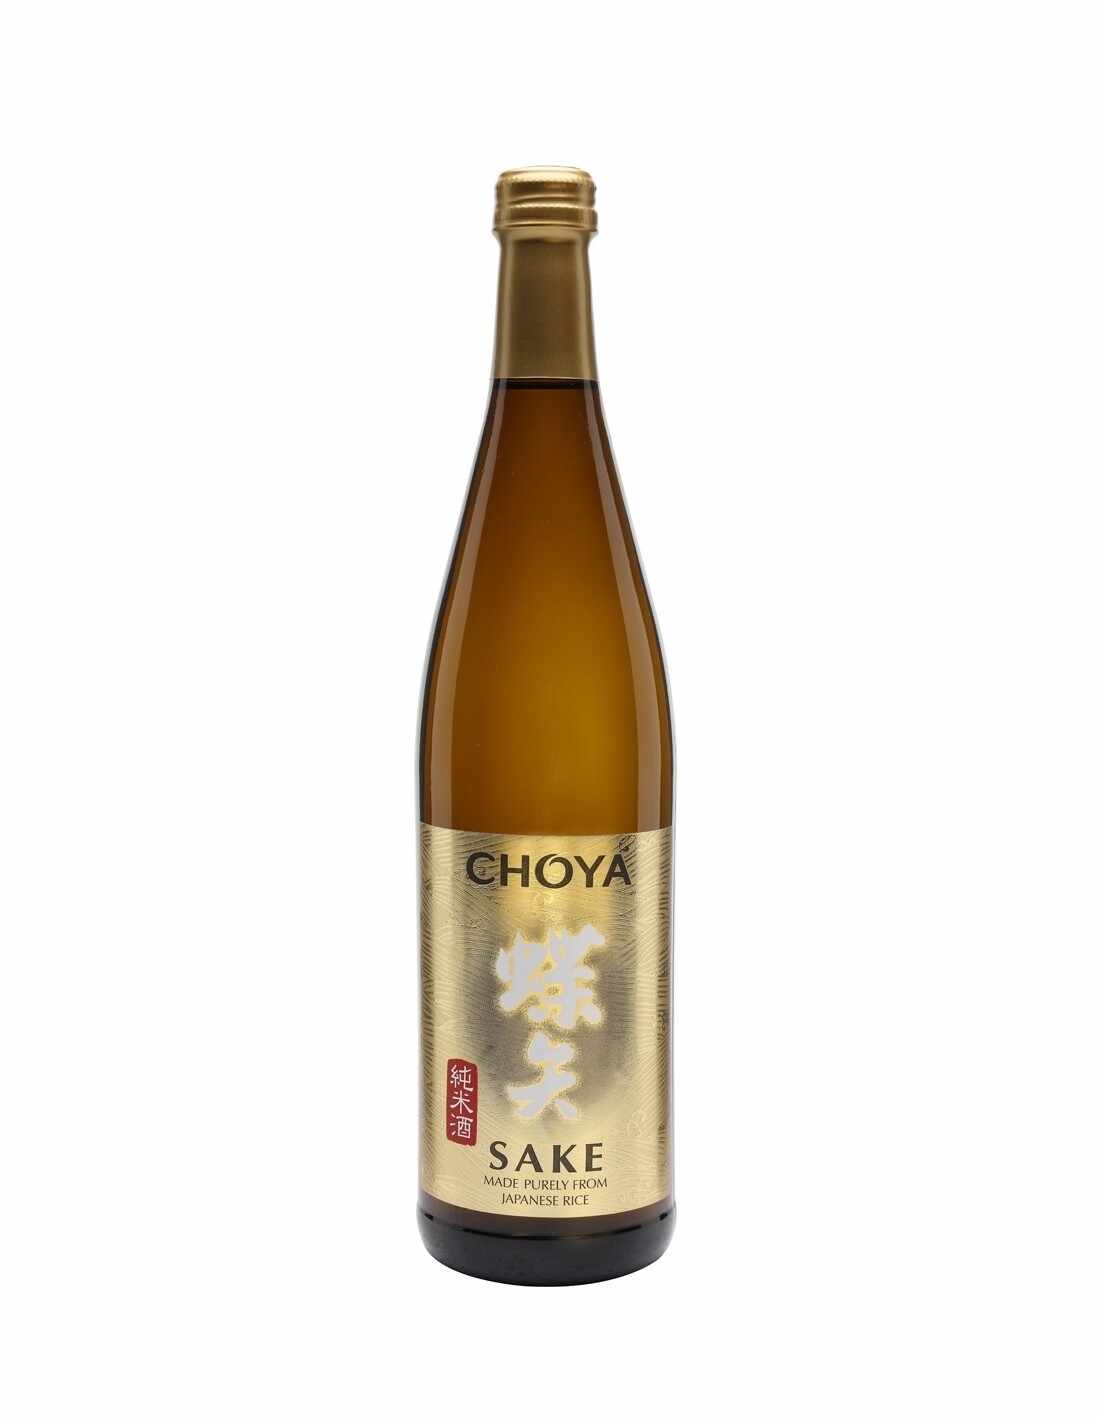 Bautura traditionala Choya Sake, 14.5% alc., 0.75L, Japonia